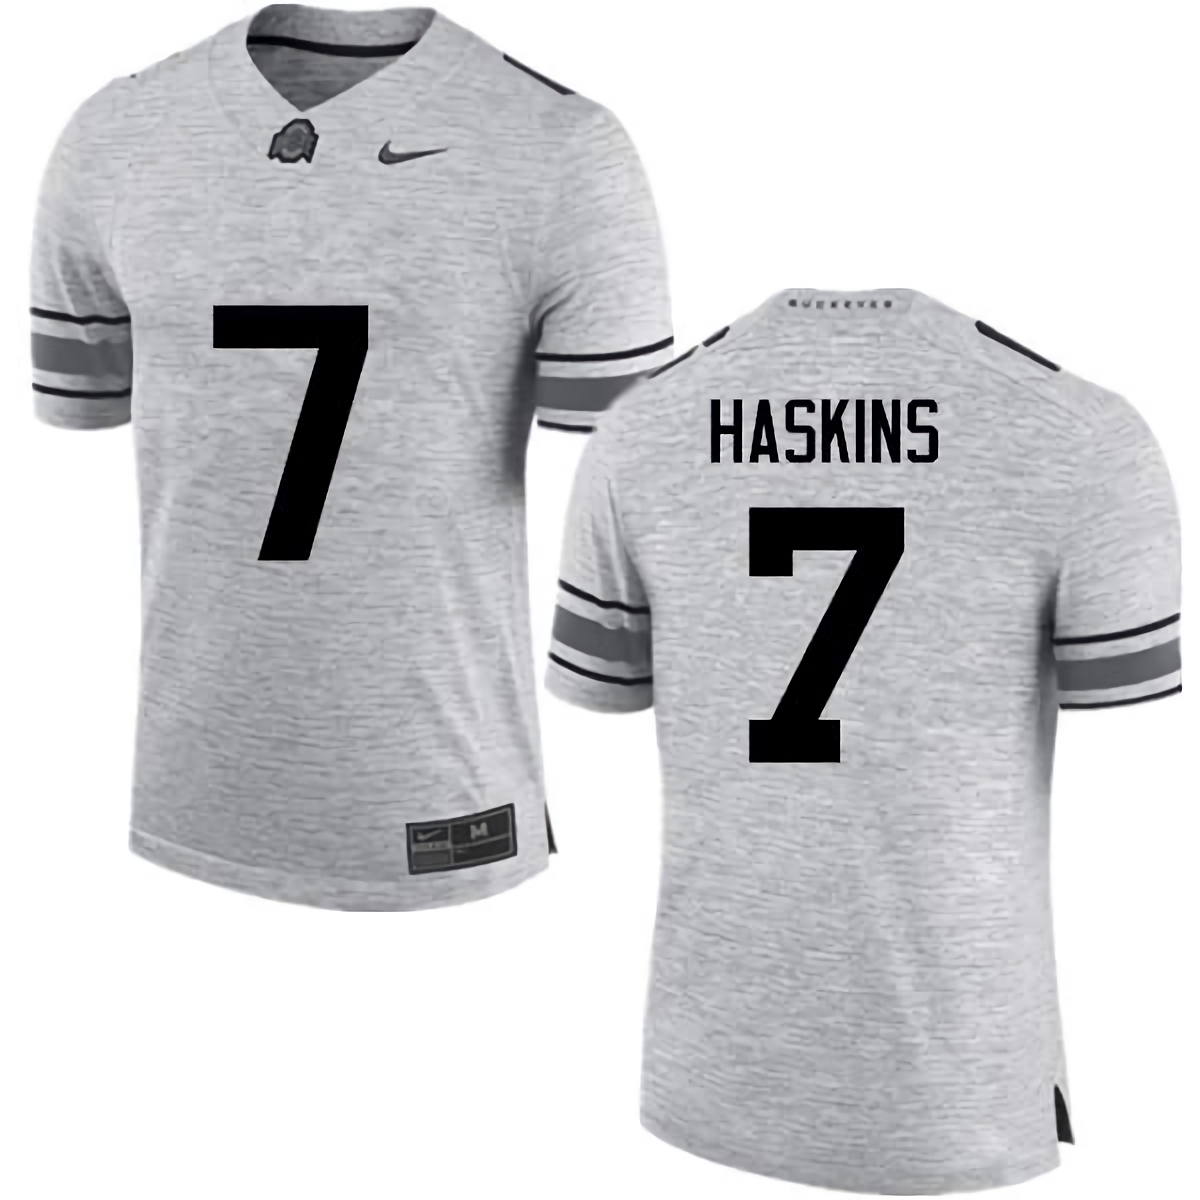 Dwayne Haskins Ohio State Buckeyes Men's NCAA #7 Nike Gray College Stitched Football Jersey KZW5256MI